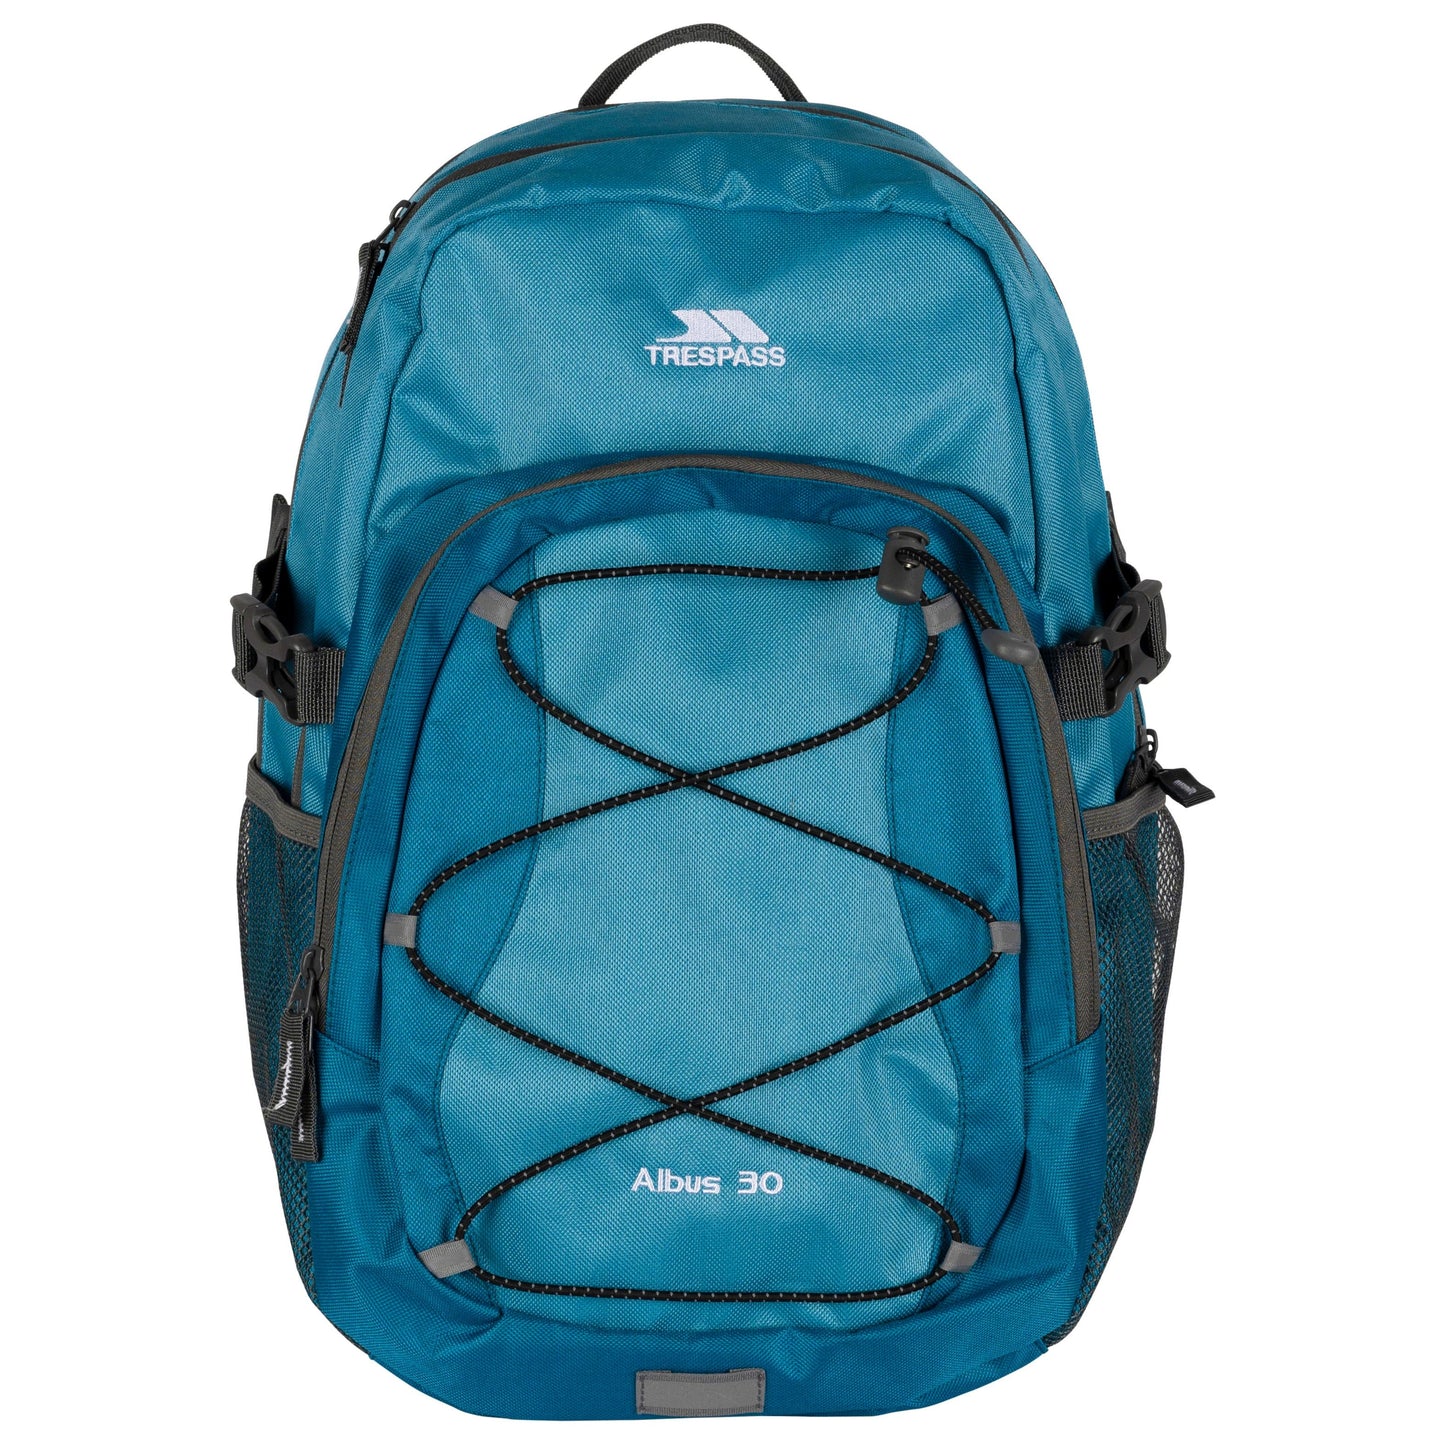 Albus 30 Litre Backpack in Blue